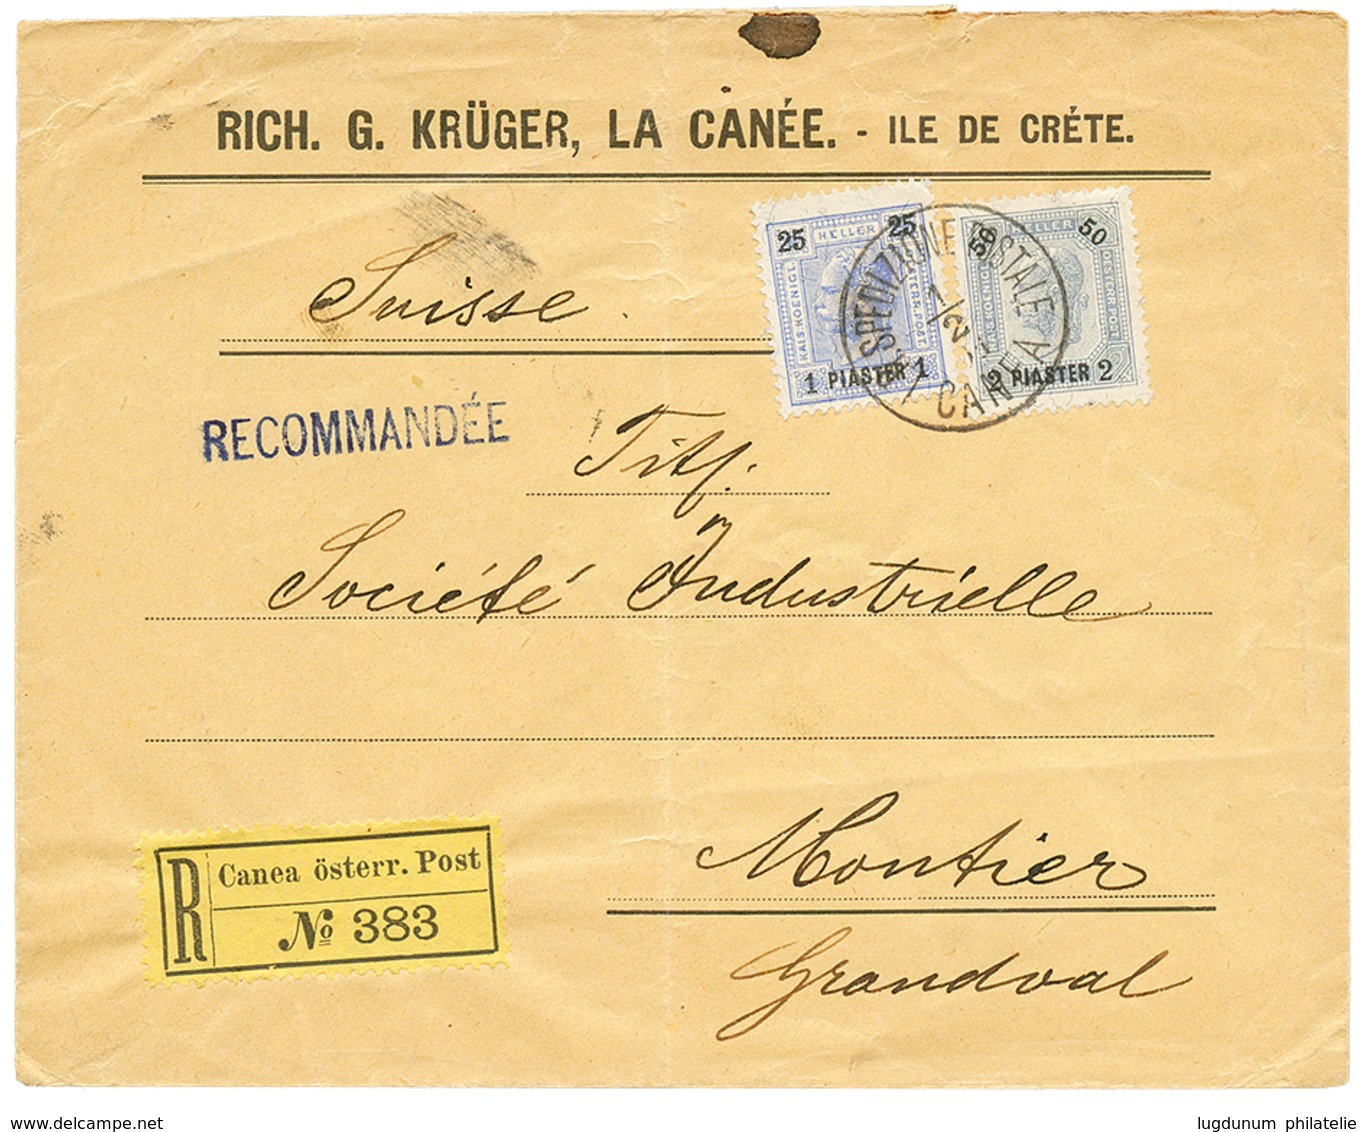 1901 1P + 2P Canc. I.R SPEDIZIONE POSTALE CANEA On REGISTERED Envelope To SWITZERLAND. Superb. - Levante-Marken